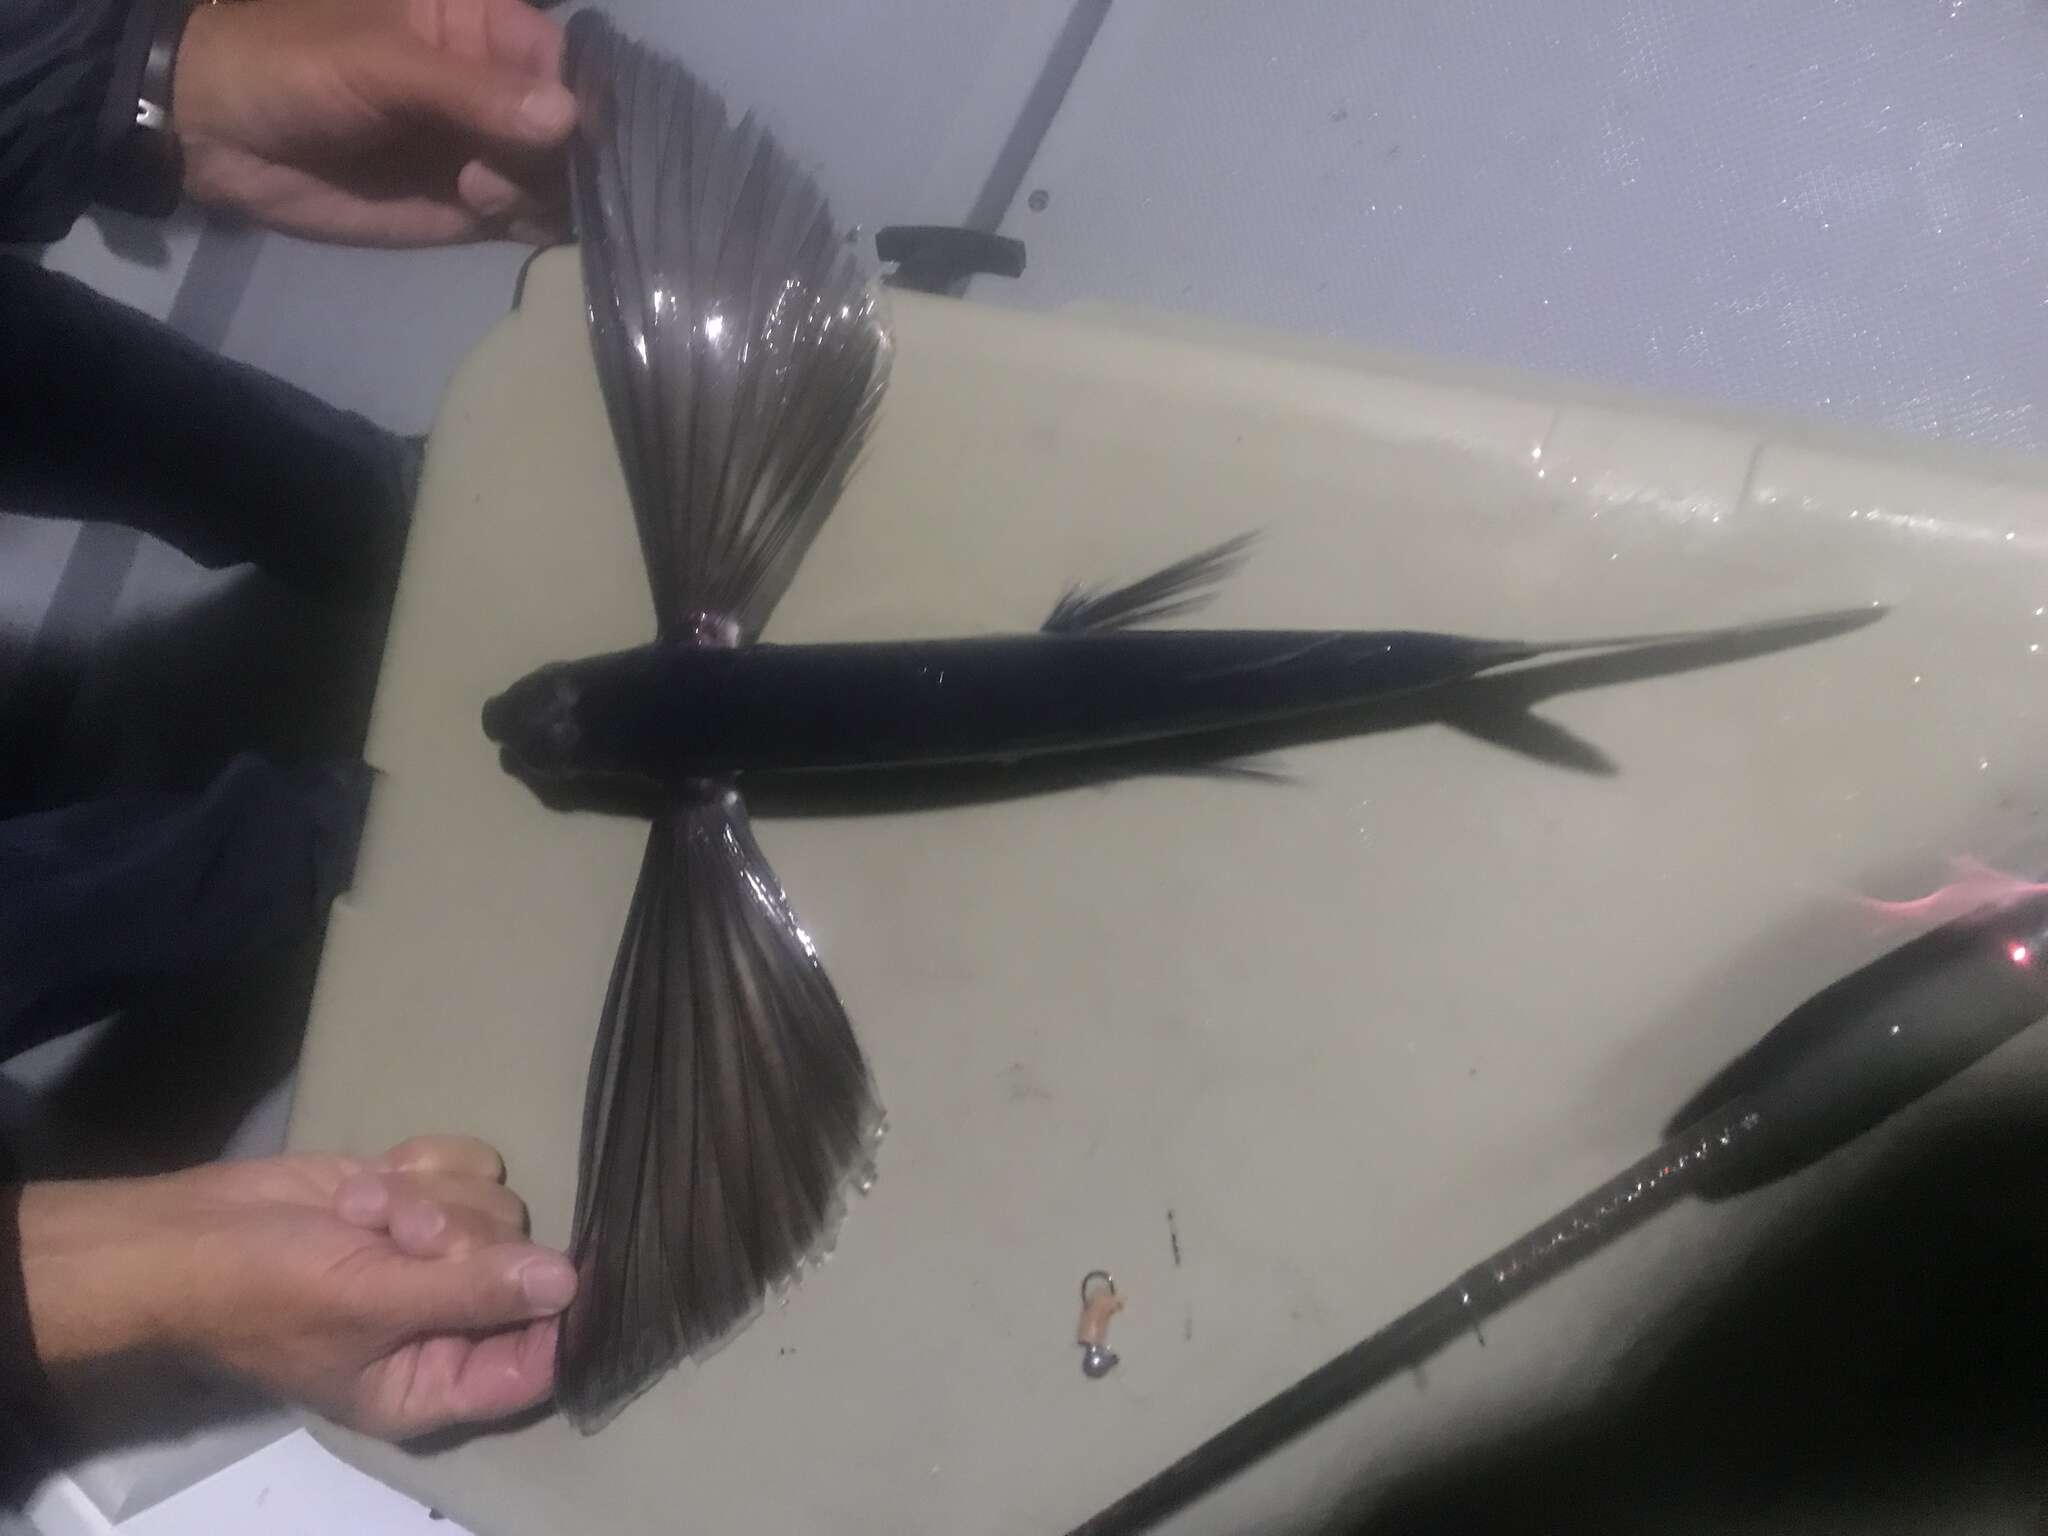 Image of Bennett's Flyingfish